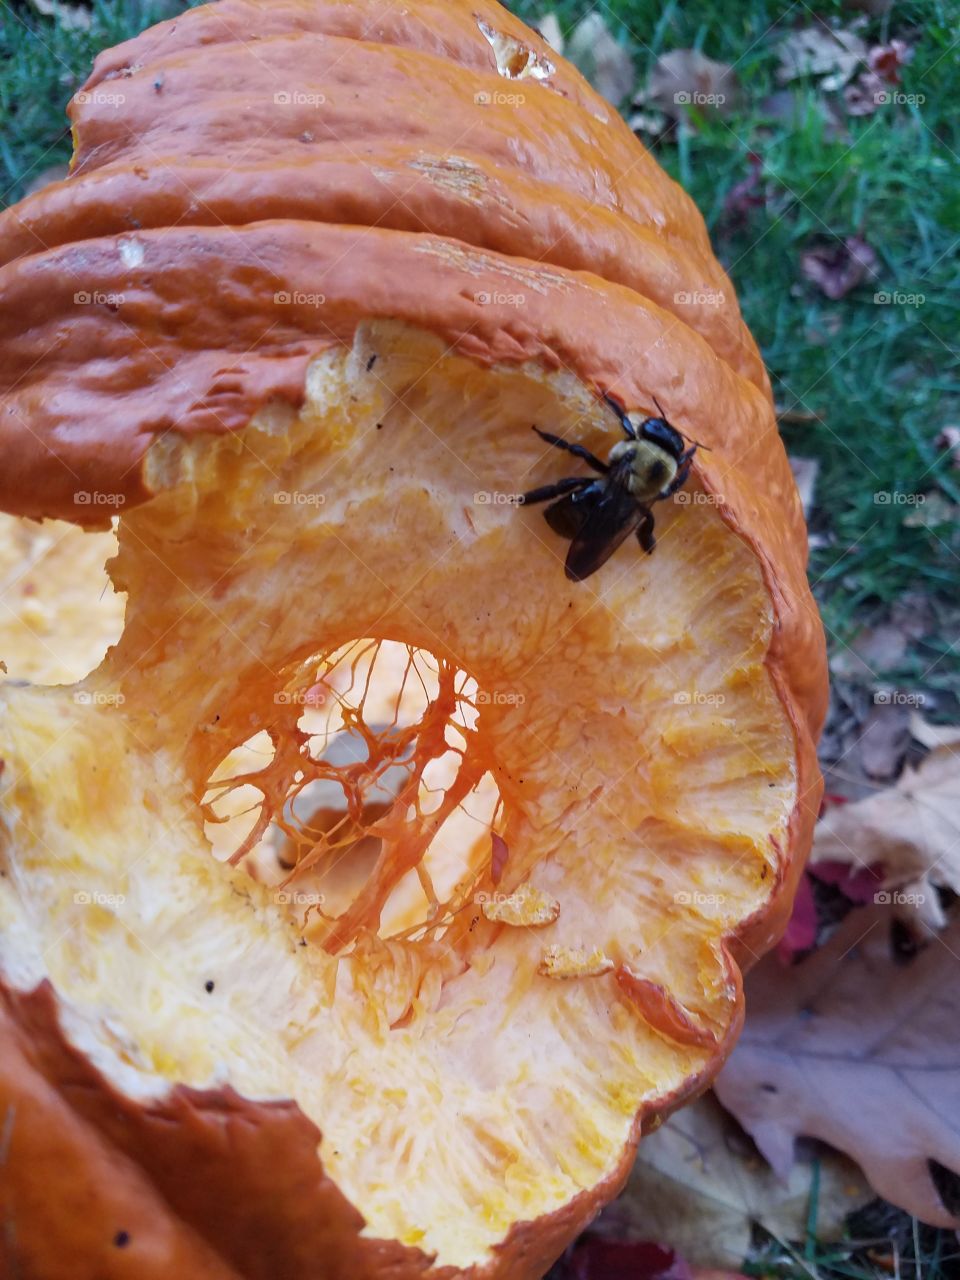 Bee seeming to enjoy some pumpkin